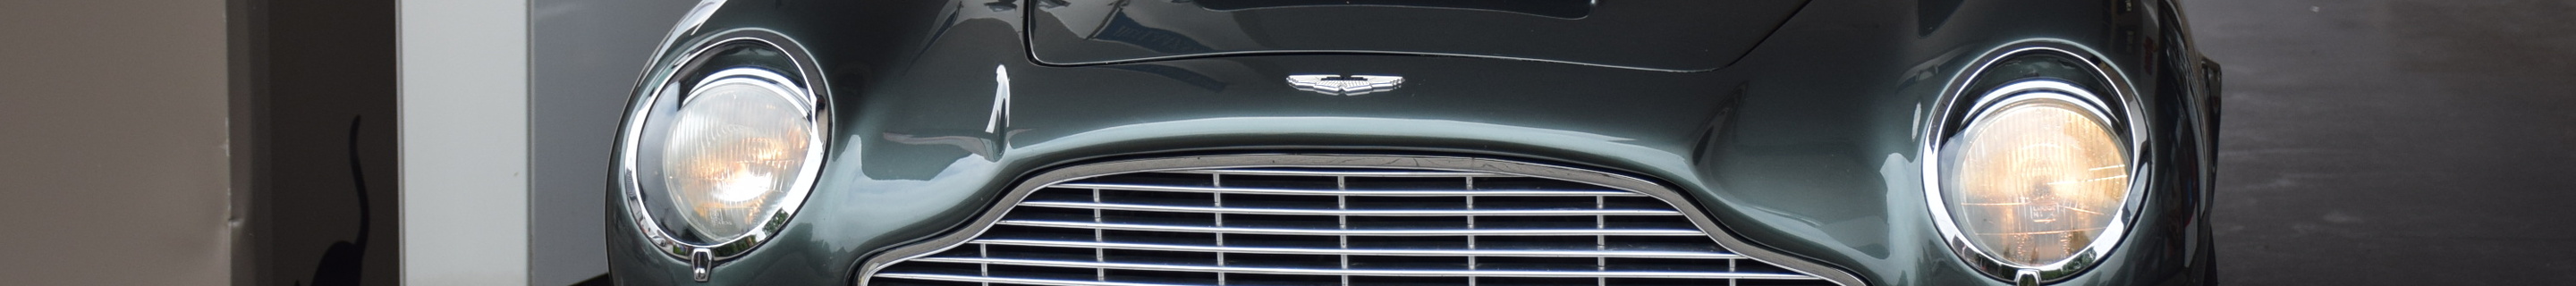 Aston Martin DB6 Superleggera